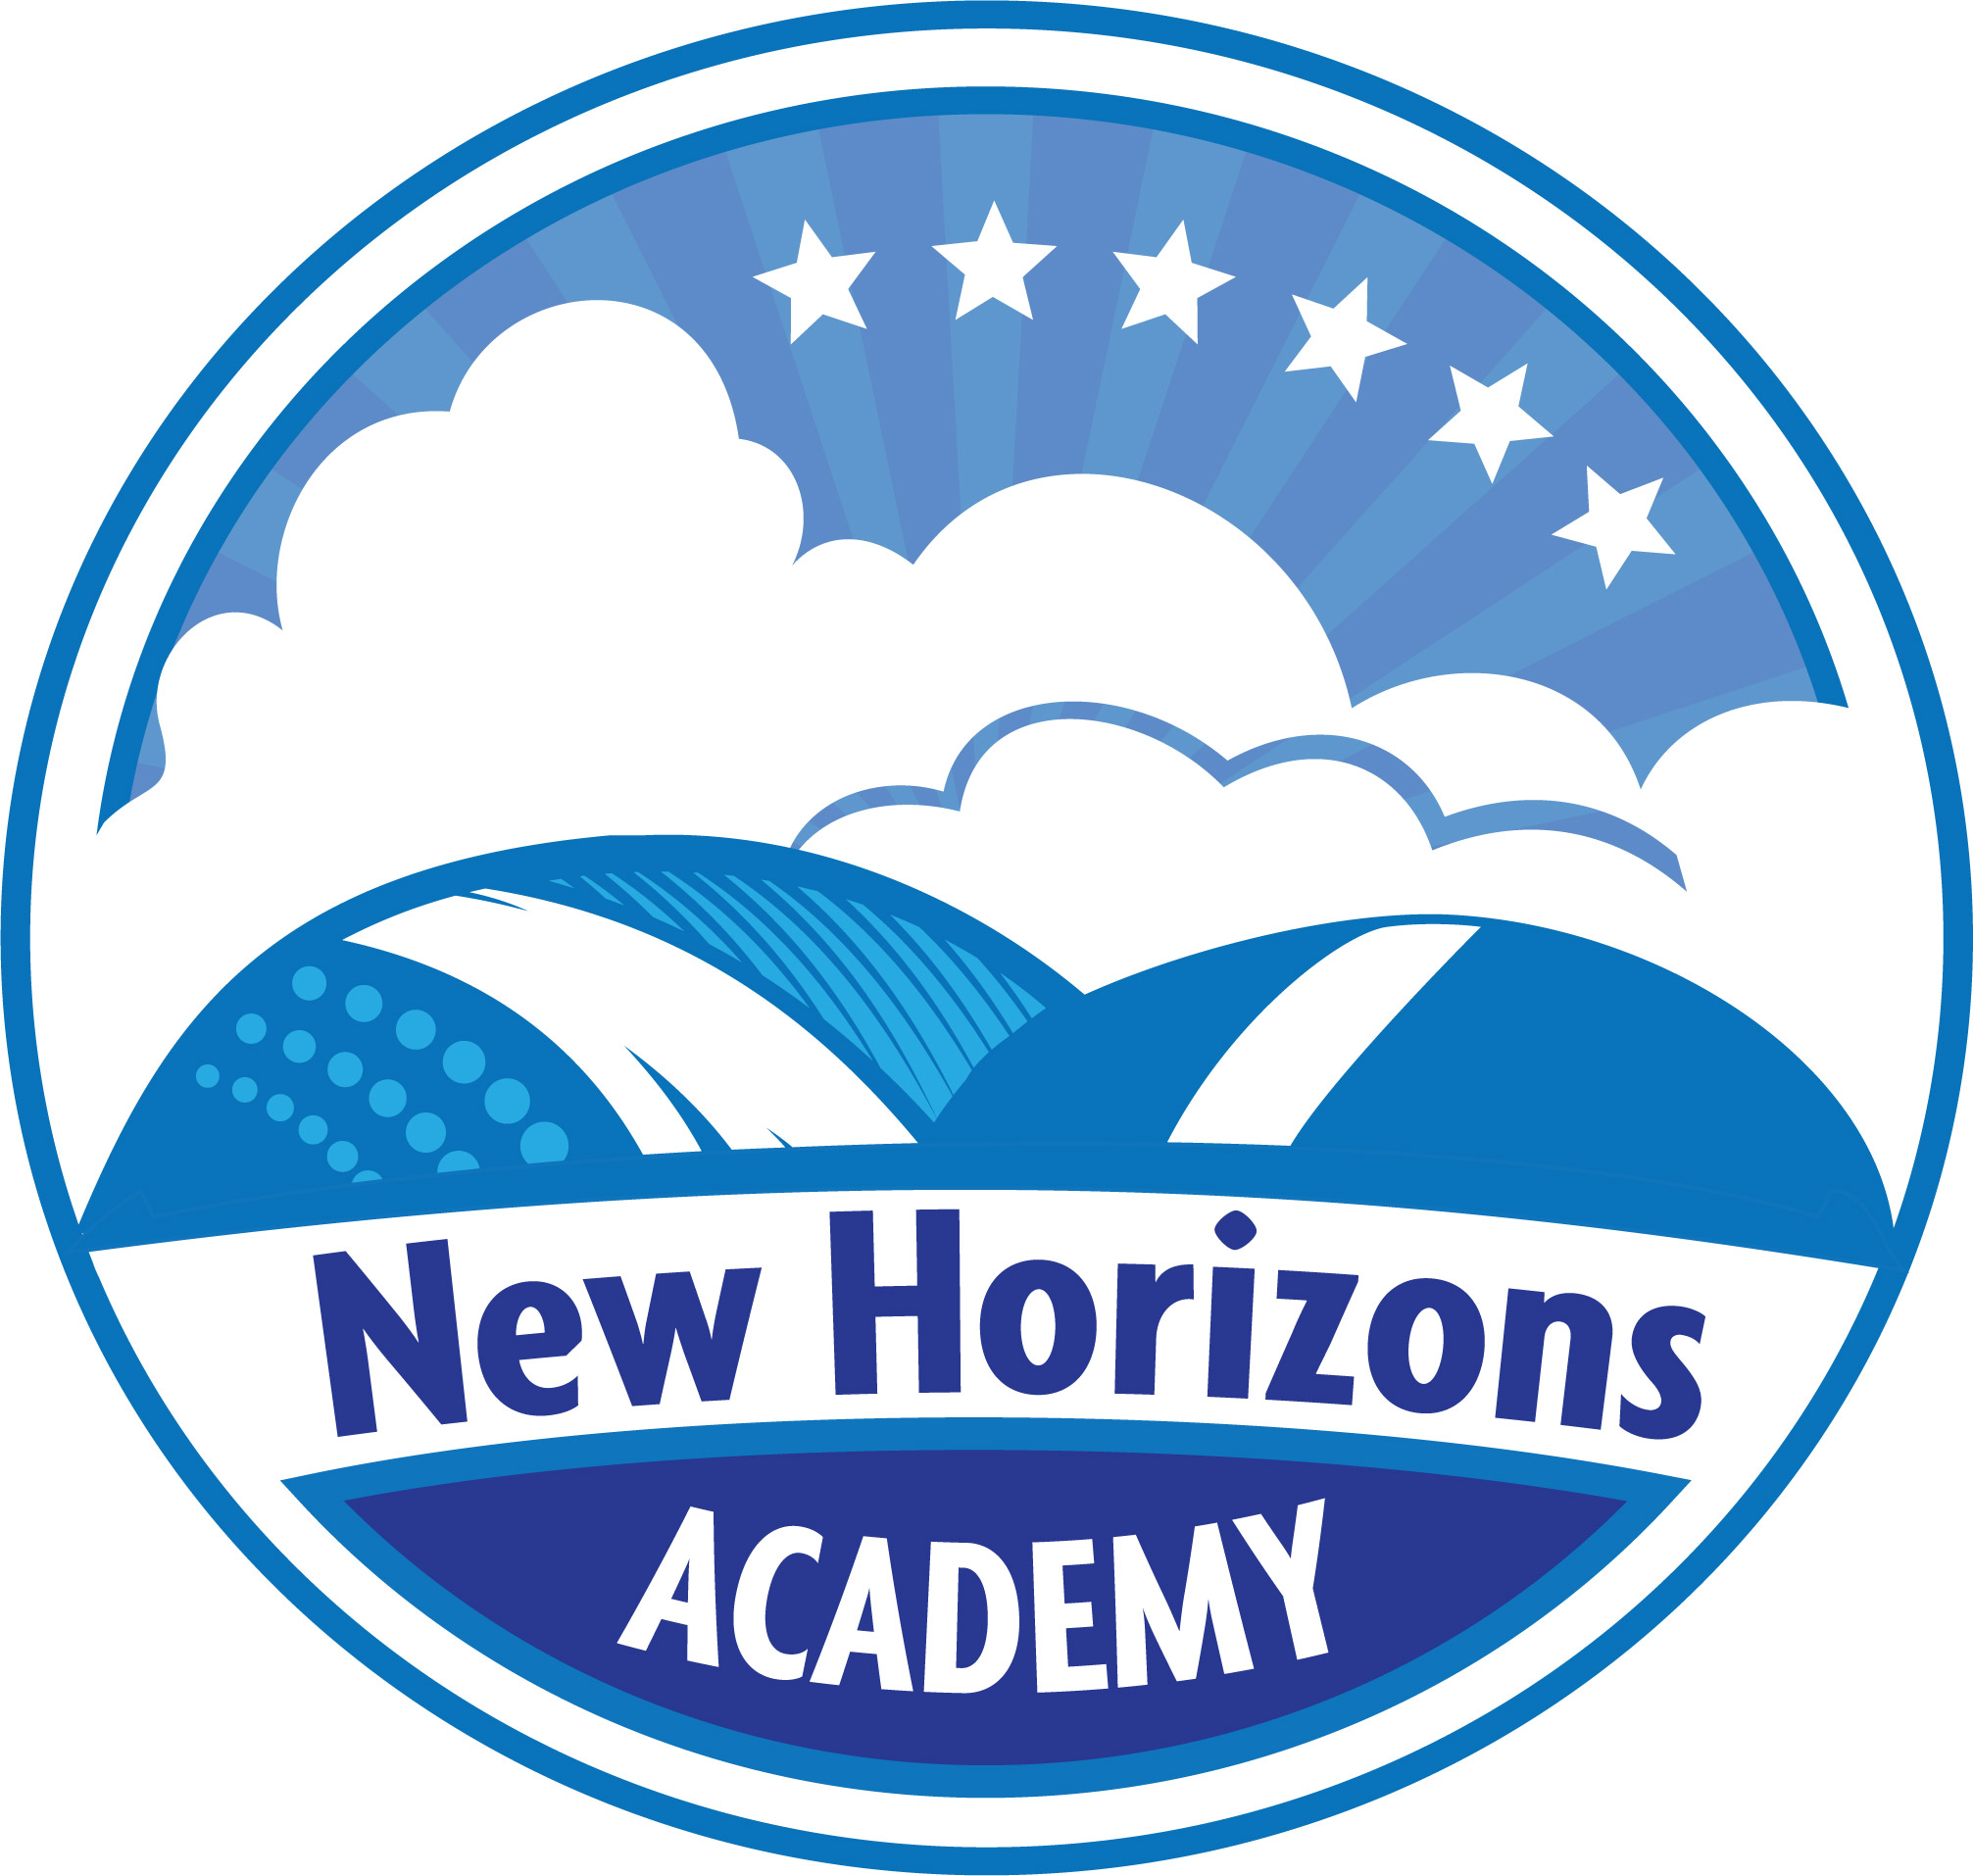 New Horizons Academy Awards 61 Students